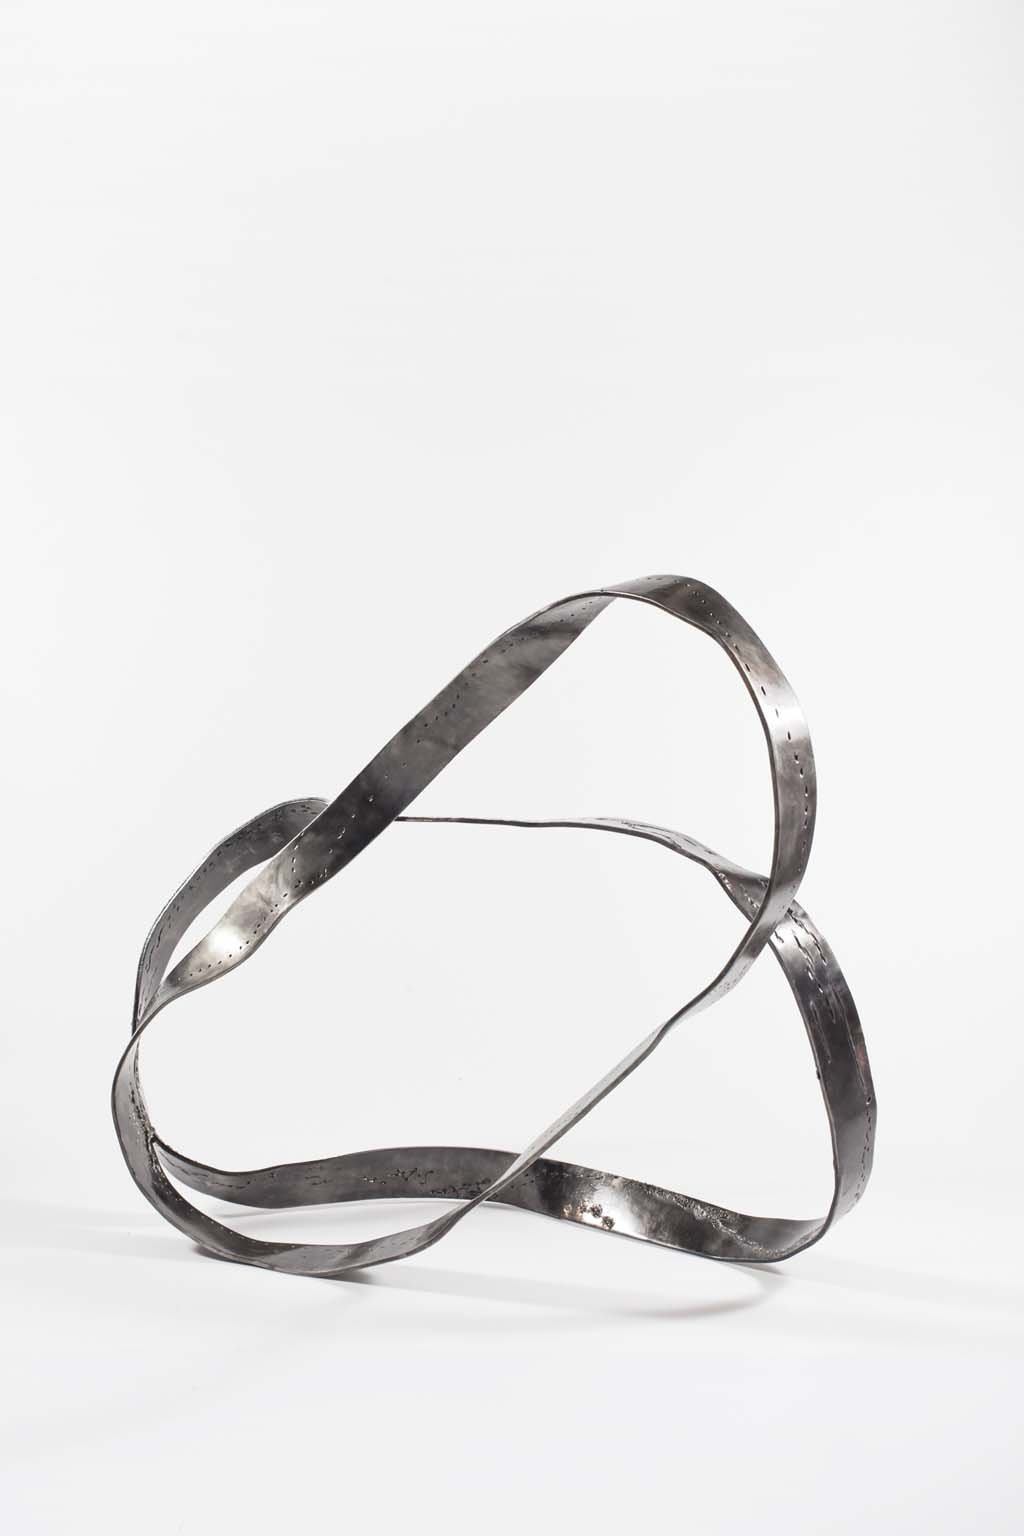 Oblivion I | 2015 | Iron & brass Sculpture | 95x110x50 cm | Rami Ater